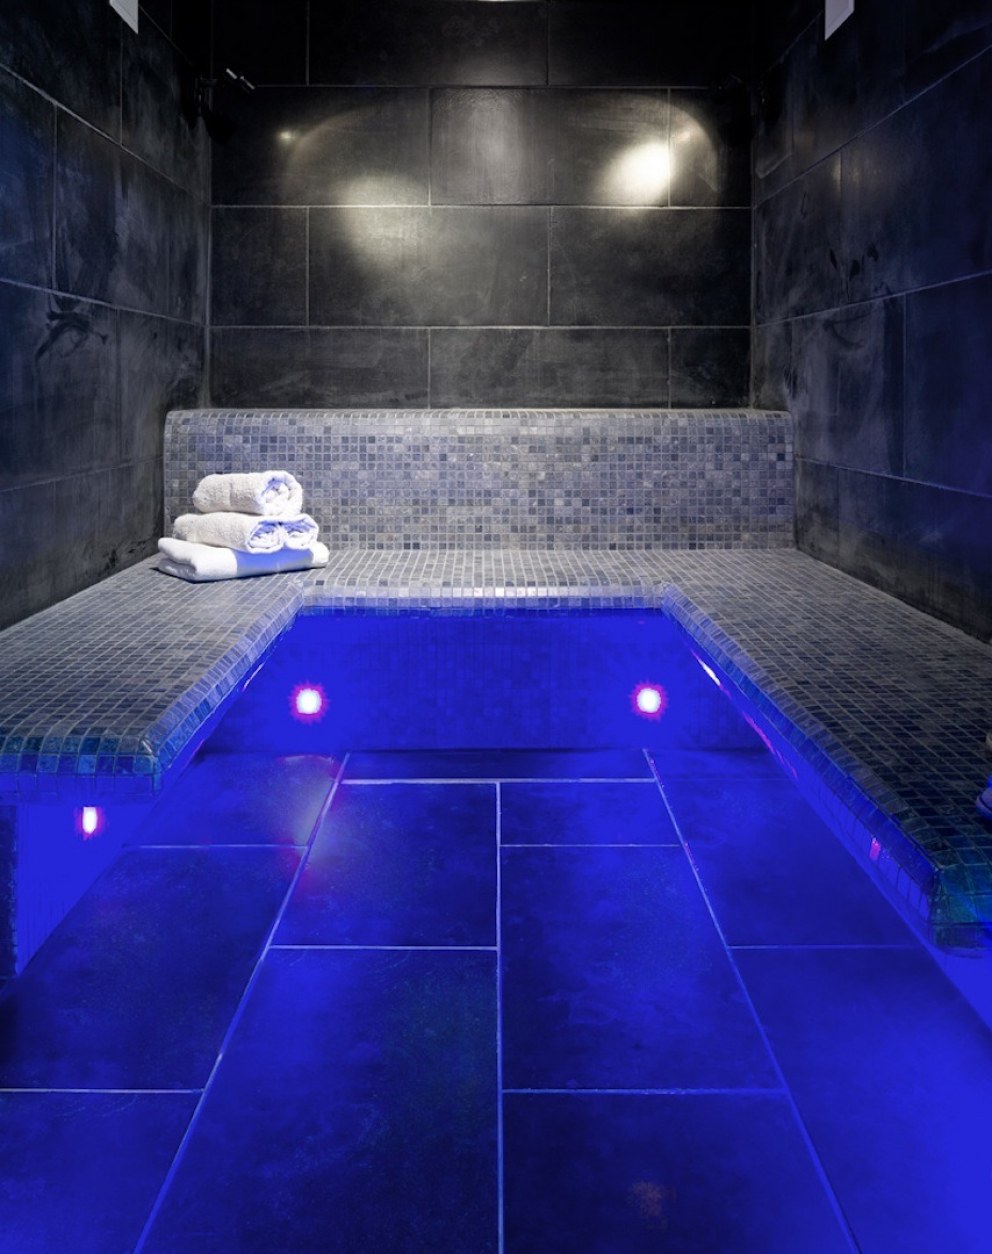 Wandsworth Edwardian basement swimming pool and gym | Basement steam room | Interior Designers